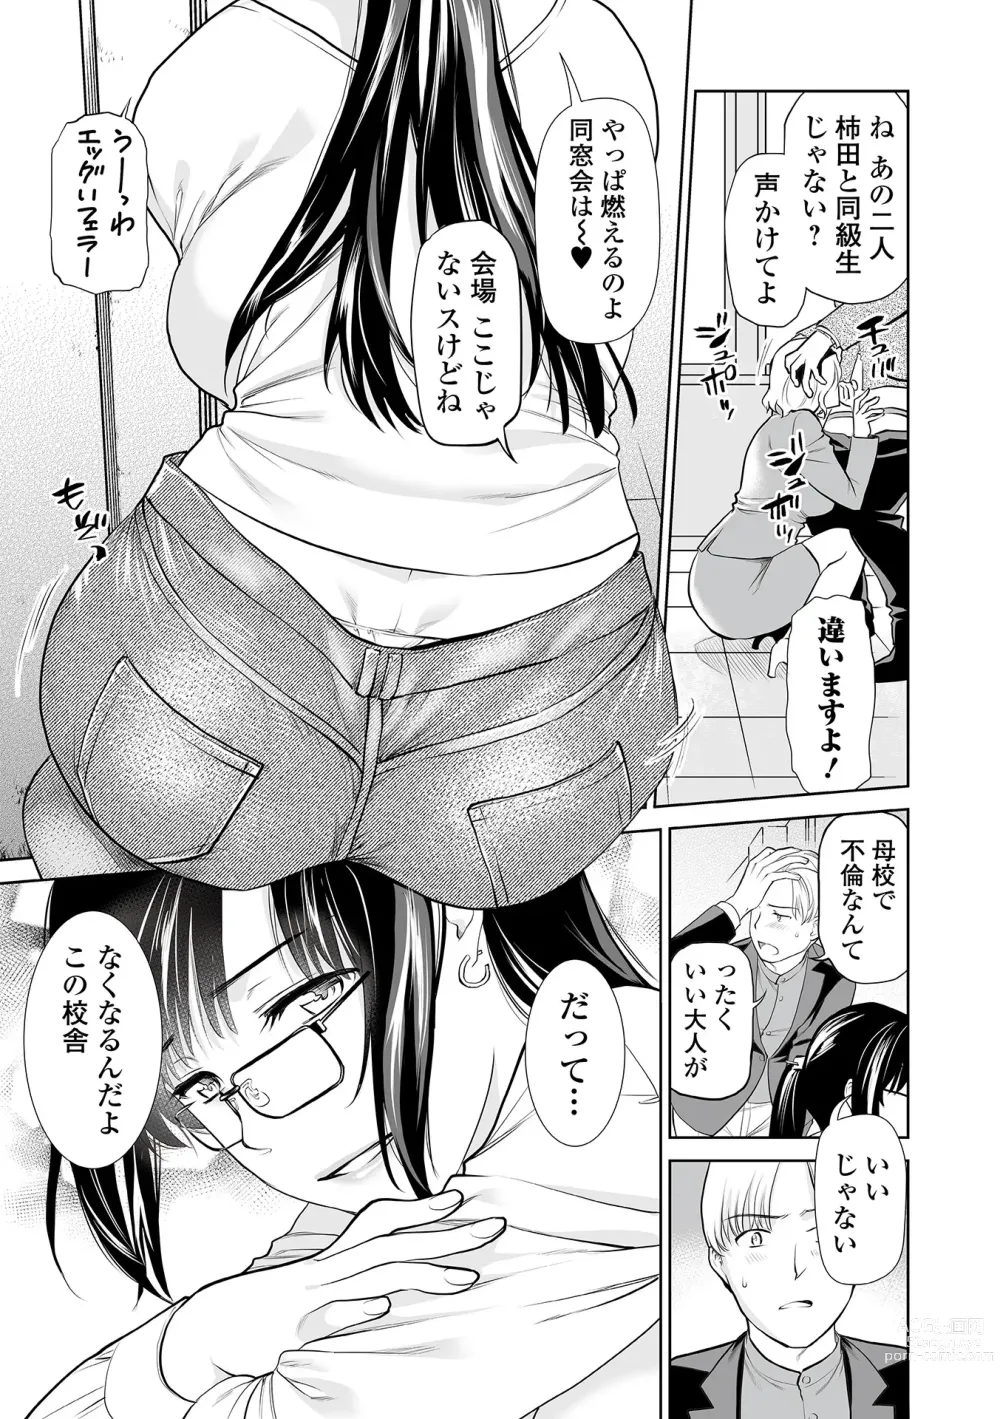 Page 5 of manga Web Comic Toutetsu Vol. 87